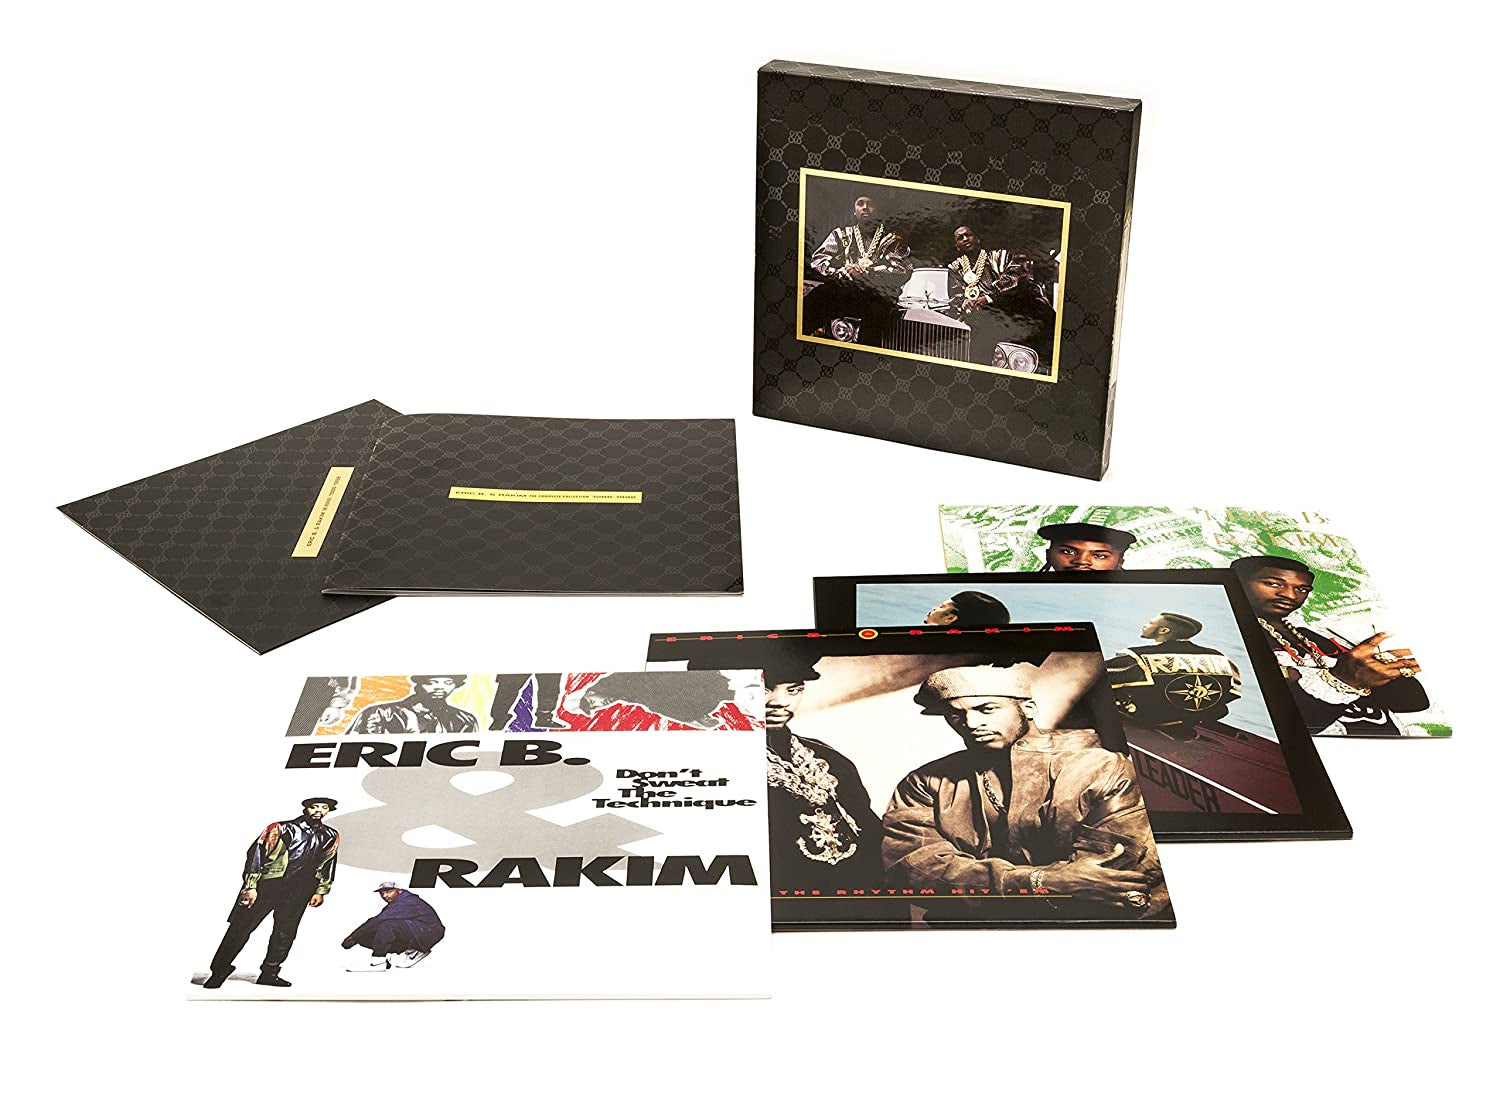 Eric B. & Rakim ‎– The Complete Collection 1987-1992 - New 8 LP Record Box Set 2018 Geffen USA Vinyl, Book & CD's - Hip Hop